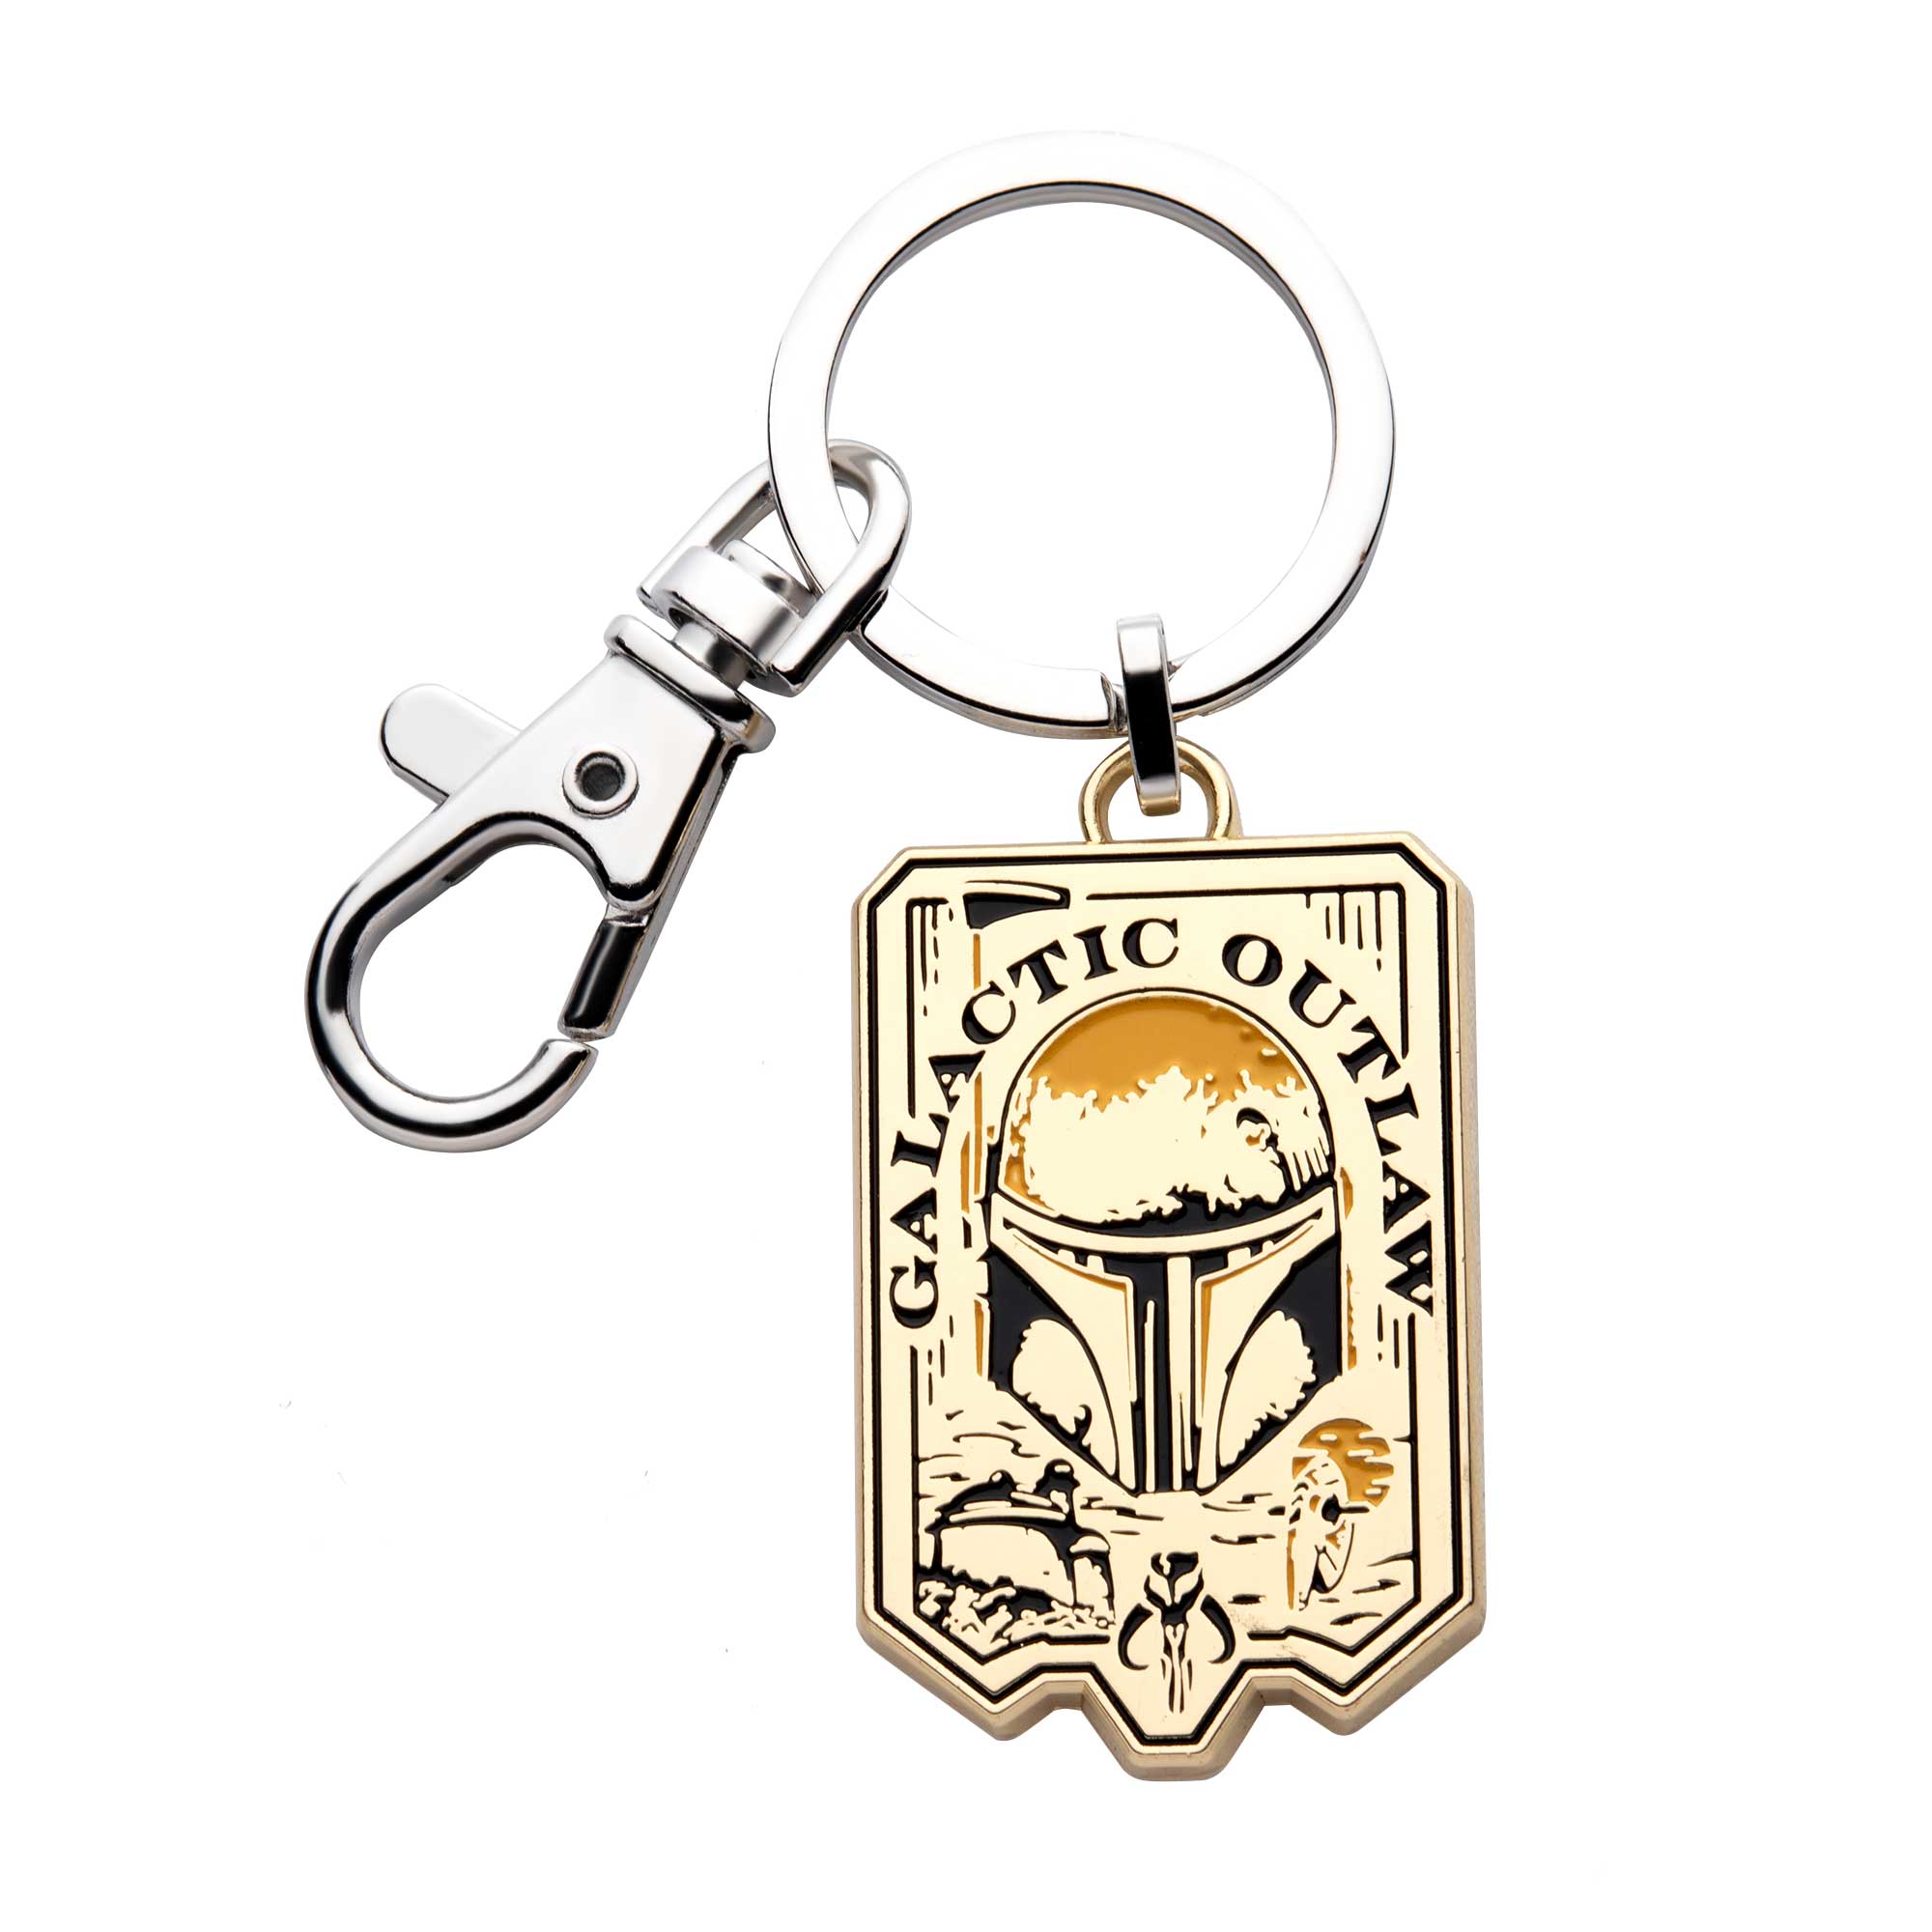 Star Wars Boba Fett Galactic Outlaw Badge Keychain